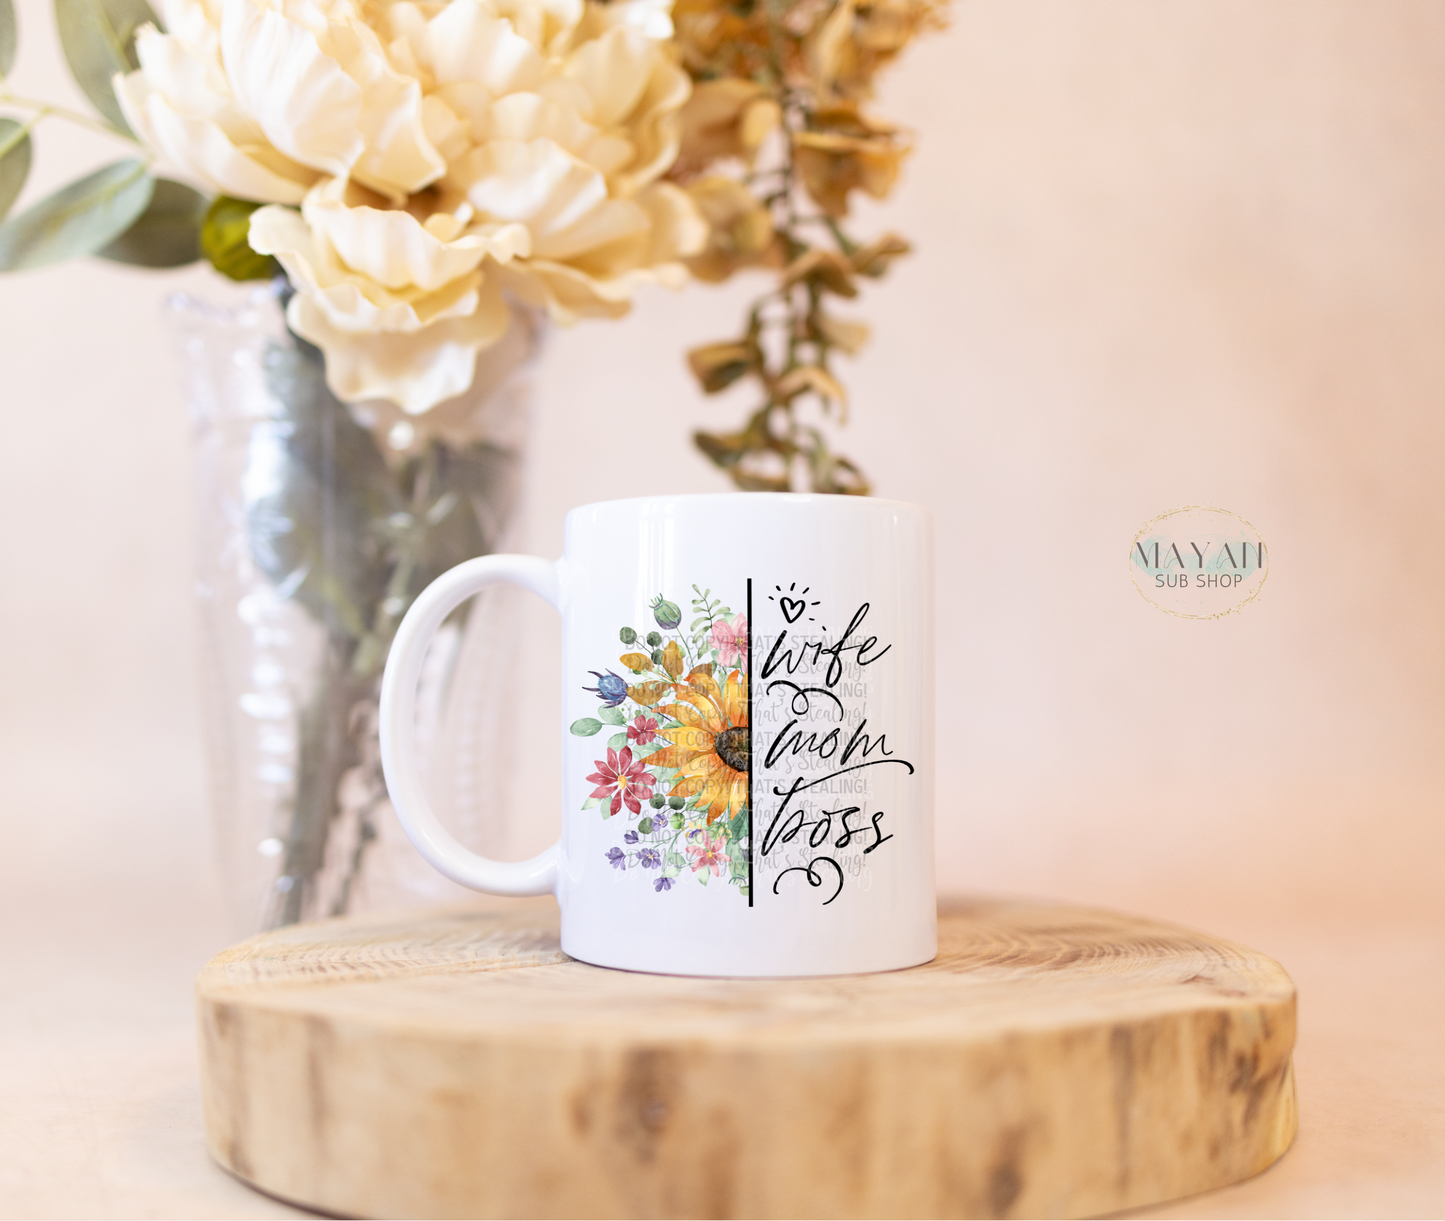 Wife mom boss 15 oz. coffee mug. -Mayan Sub Shop